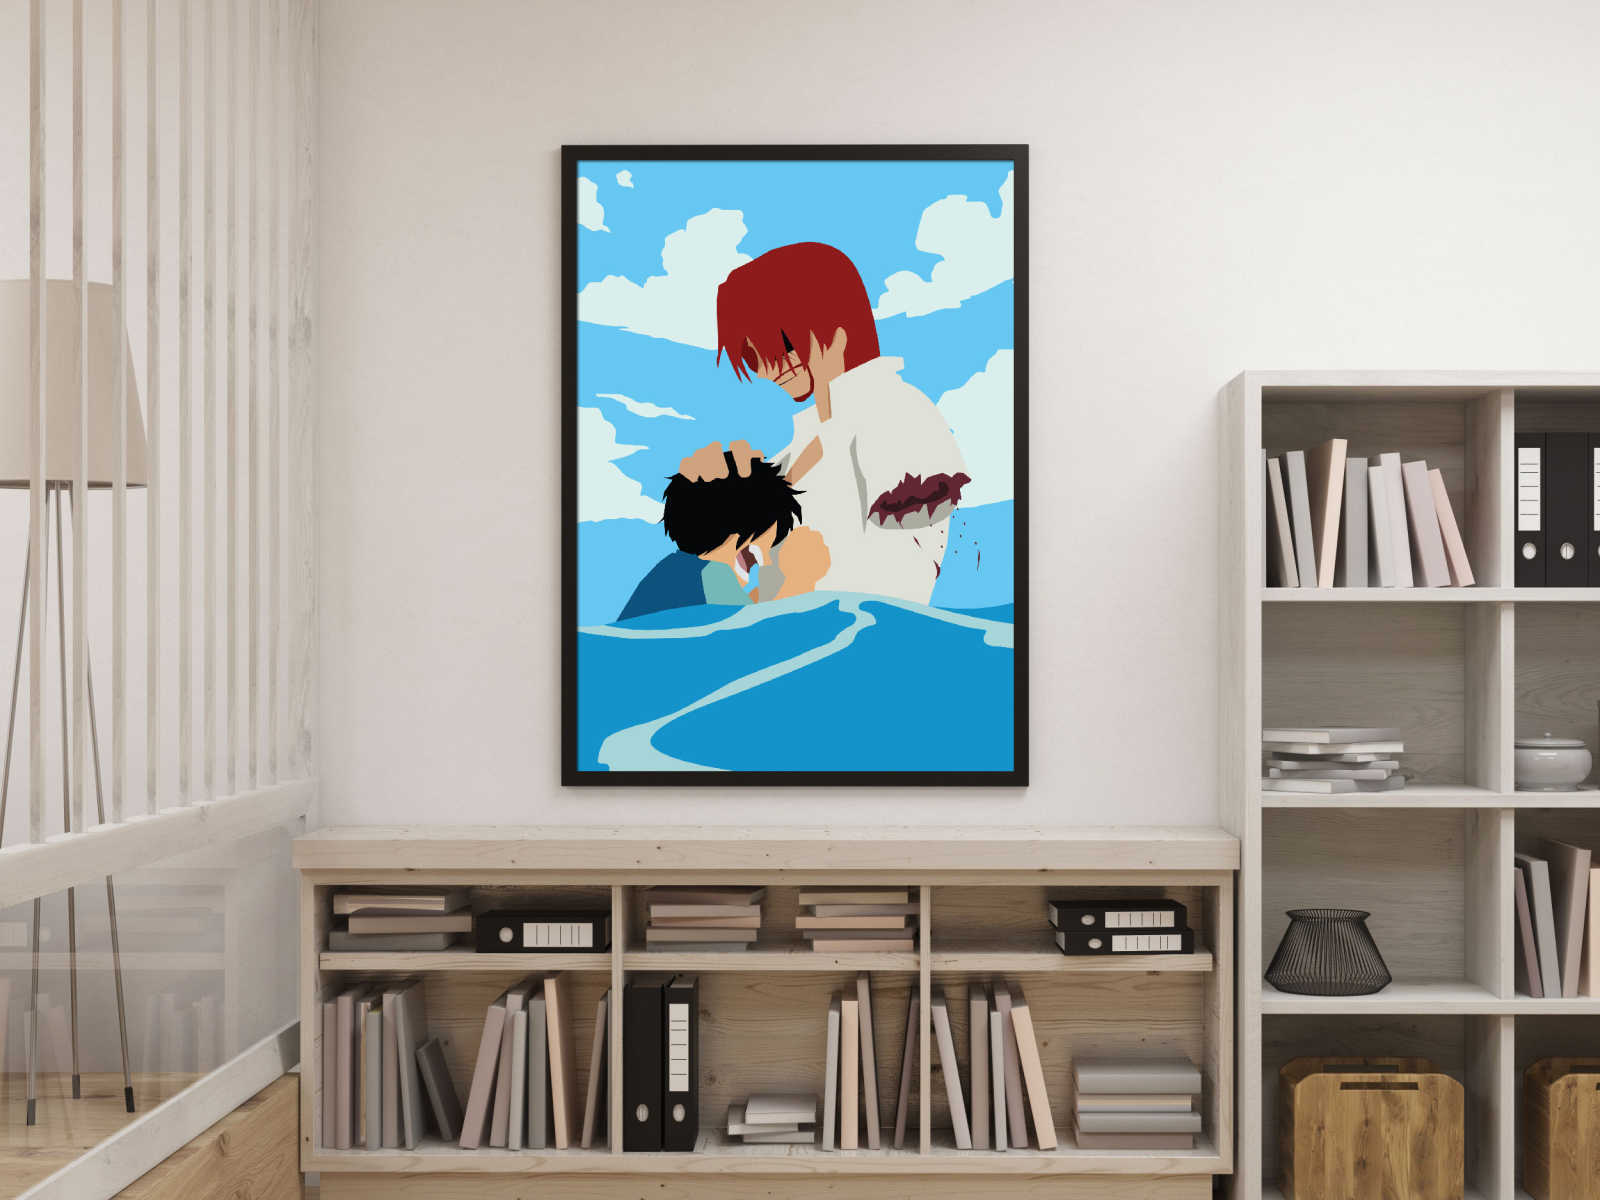 The anime boyand the blue sky - Anime - Posters and Art Prints | TeePublic